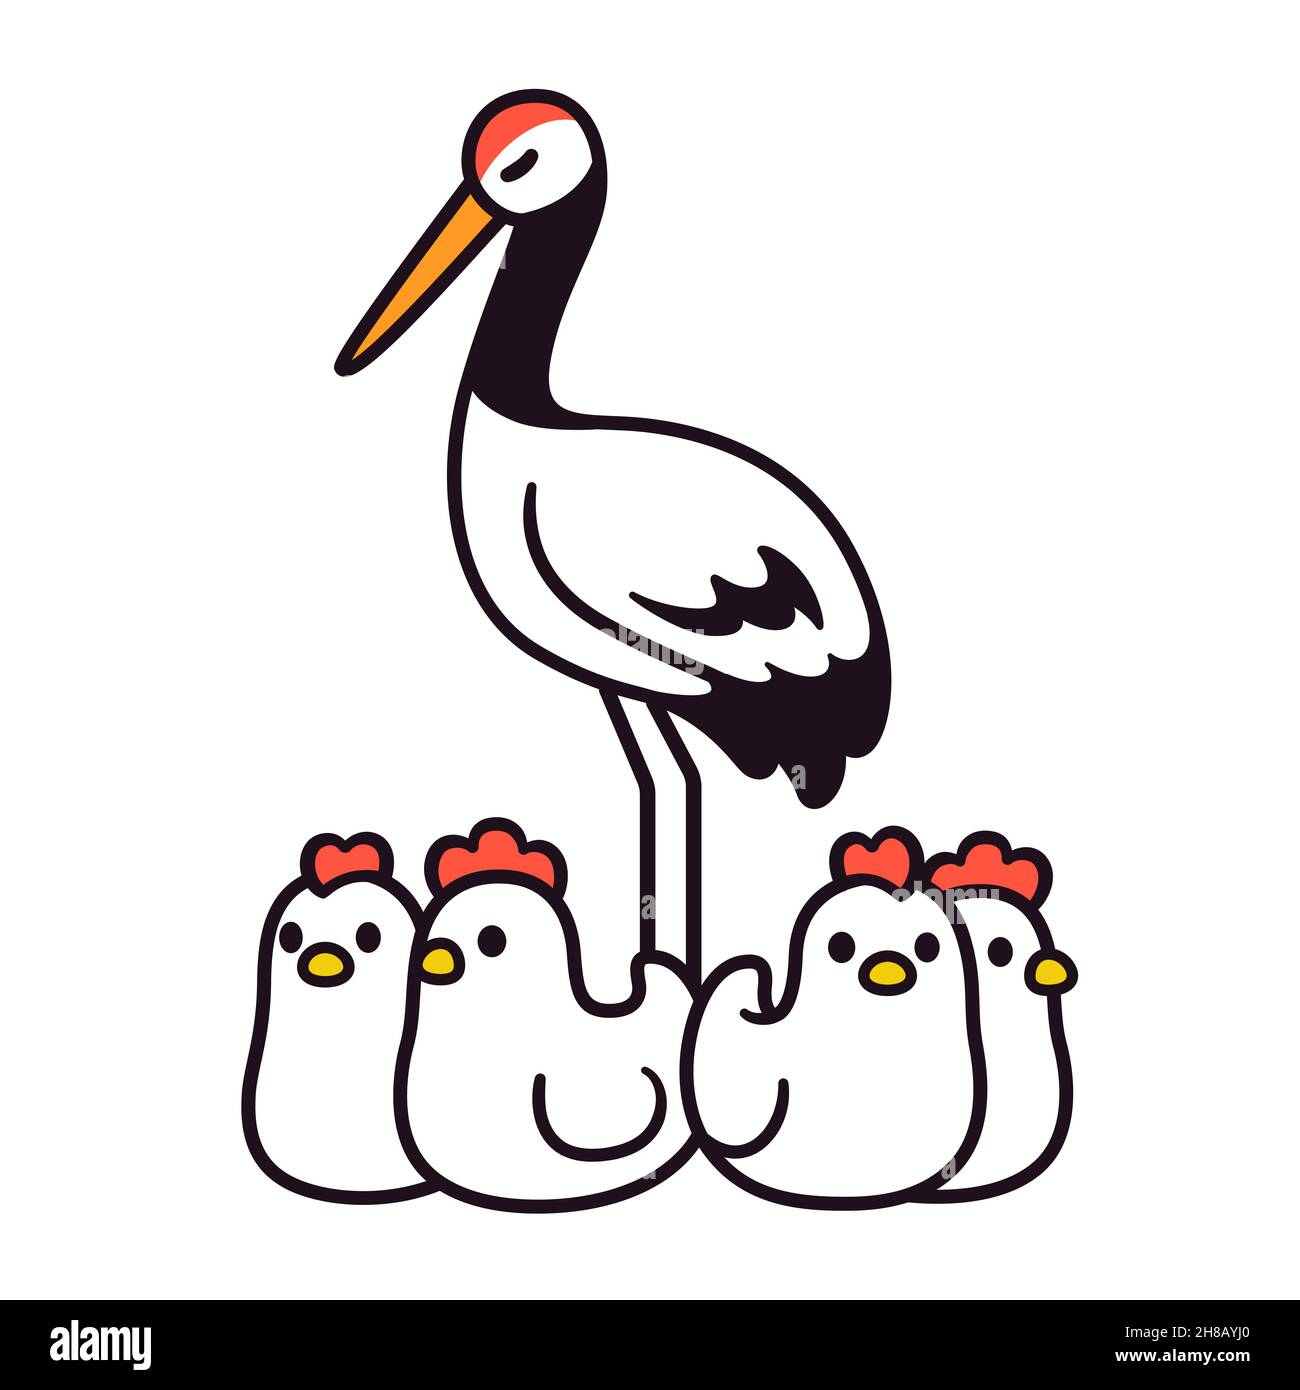 鹤立鸡群 espressione cinese: Una gru in piedi tra polli. Semplice disegno cartoon, illustrazione vettoriale. Illustrazione Vettoriale